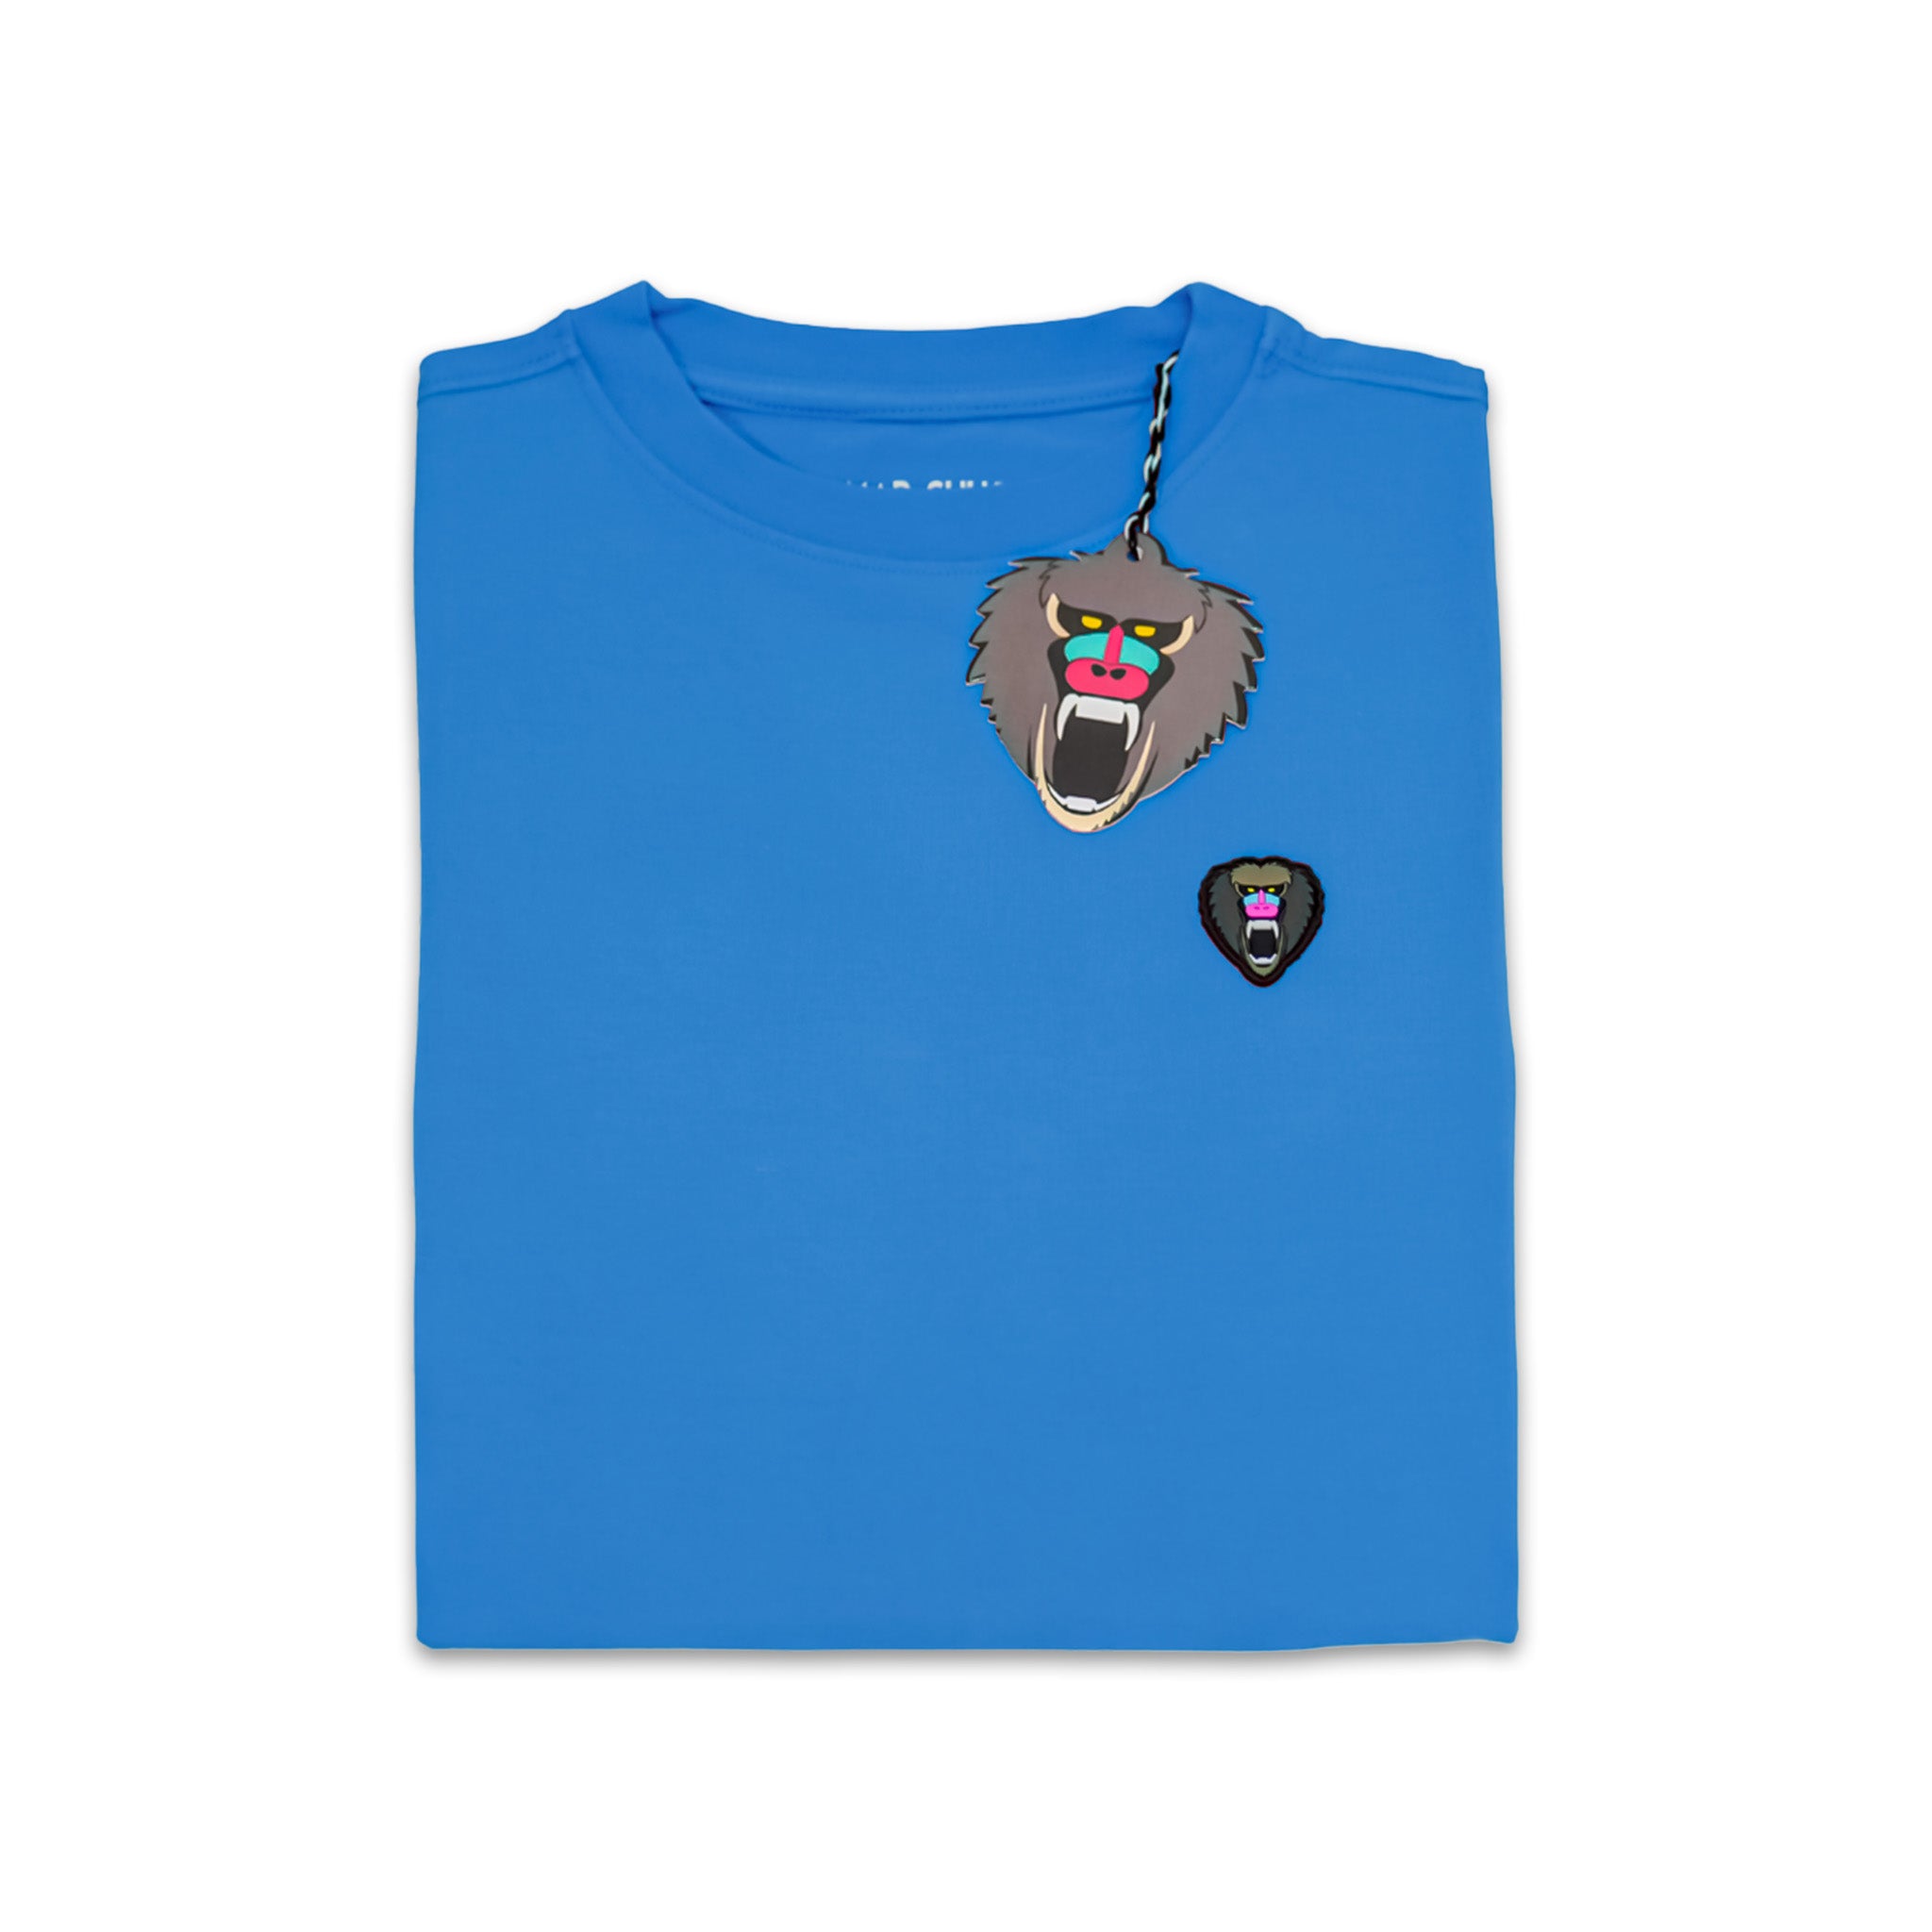 Mad Chuck Light Blue Shirt - Folded Shirt Photo